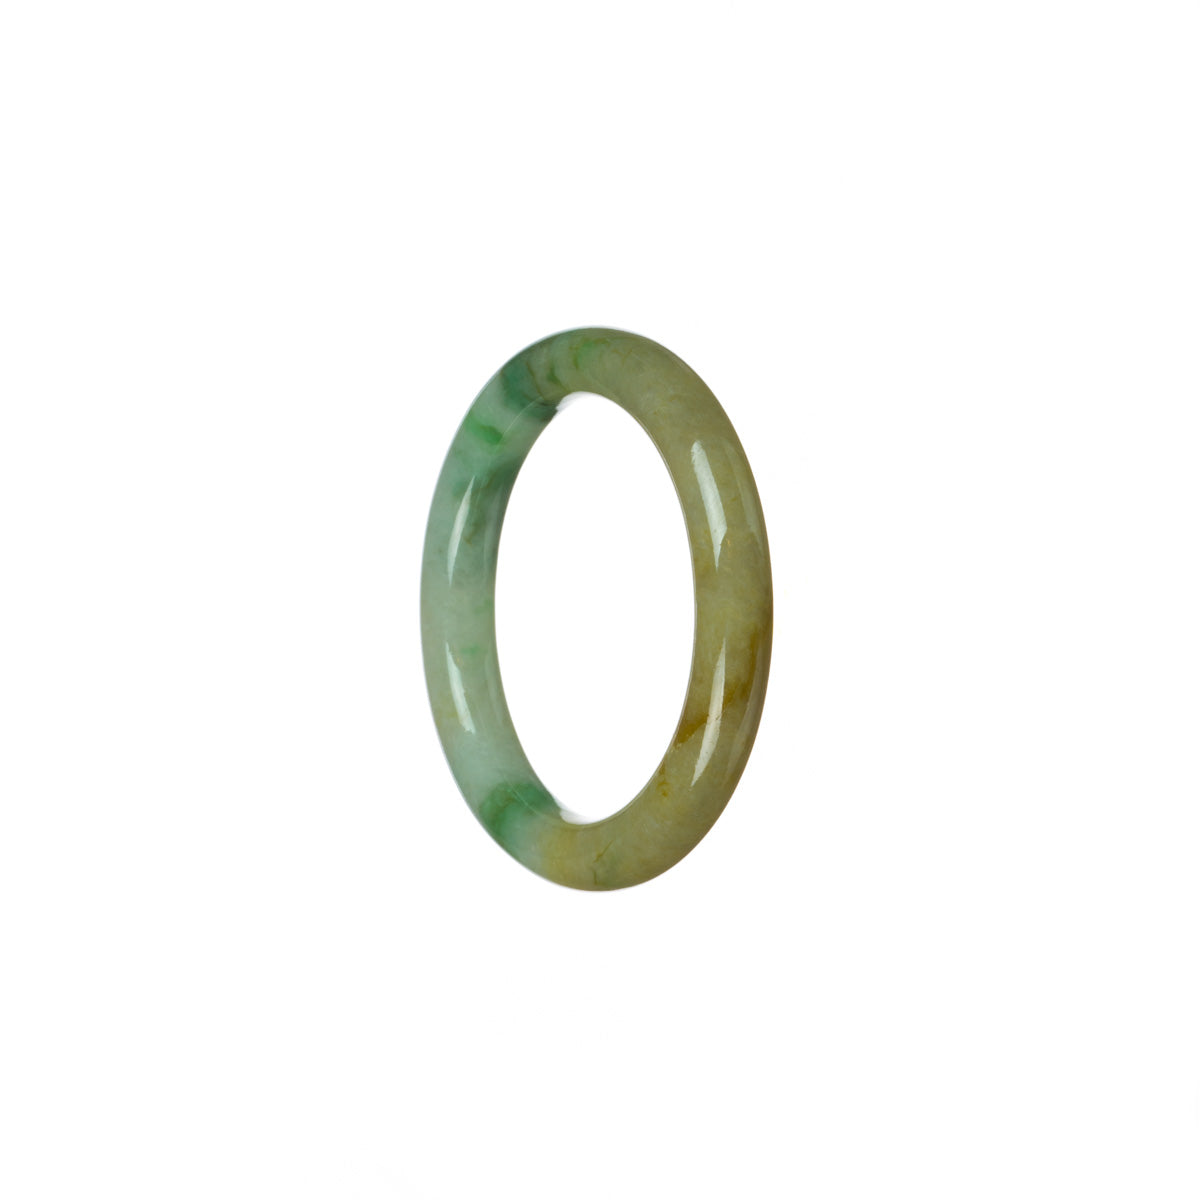 Certified Type A Brownish white with emerald green Jadeite Jade Bangle Bracelet - Child Child